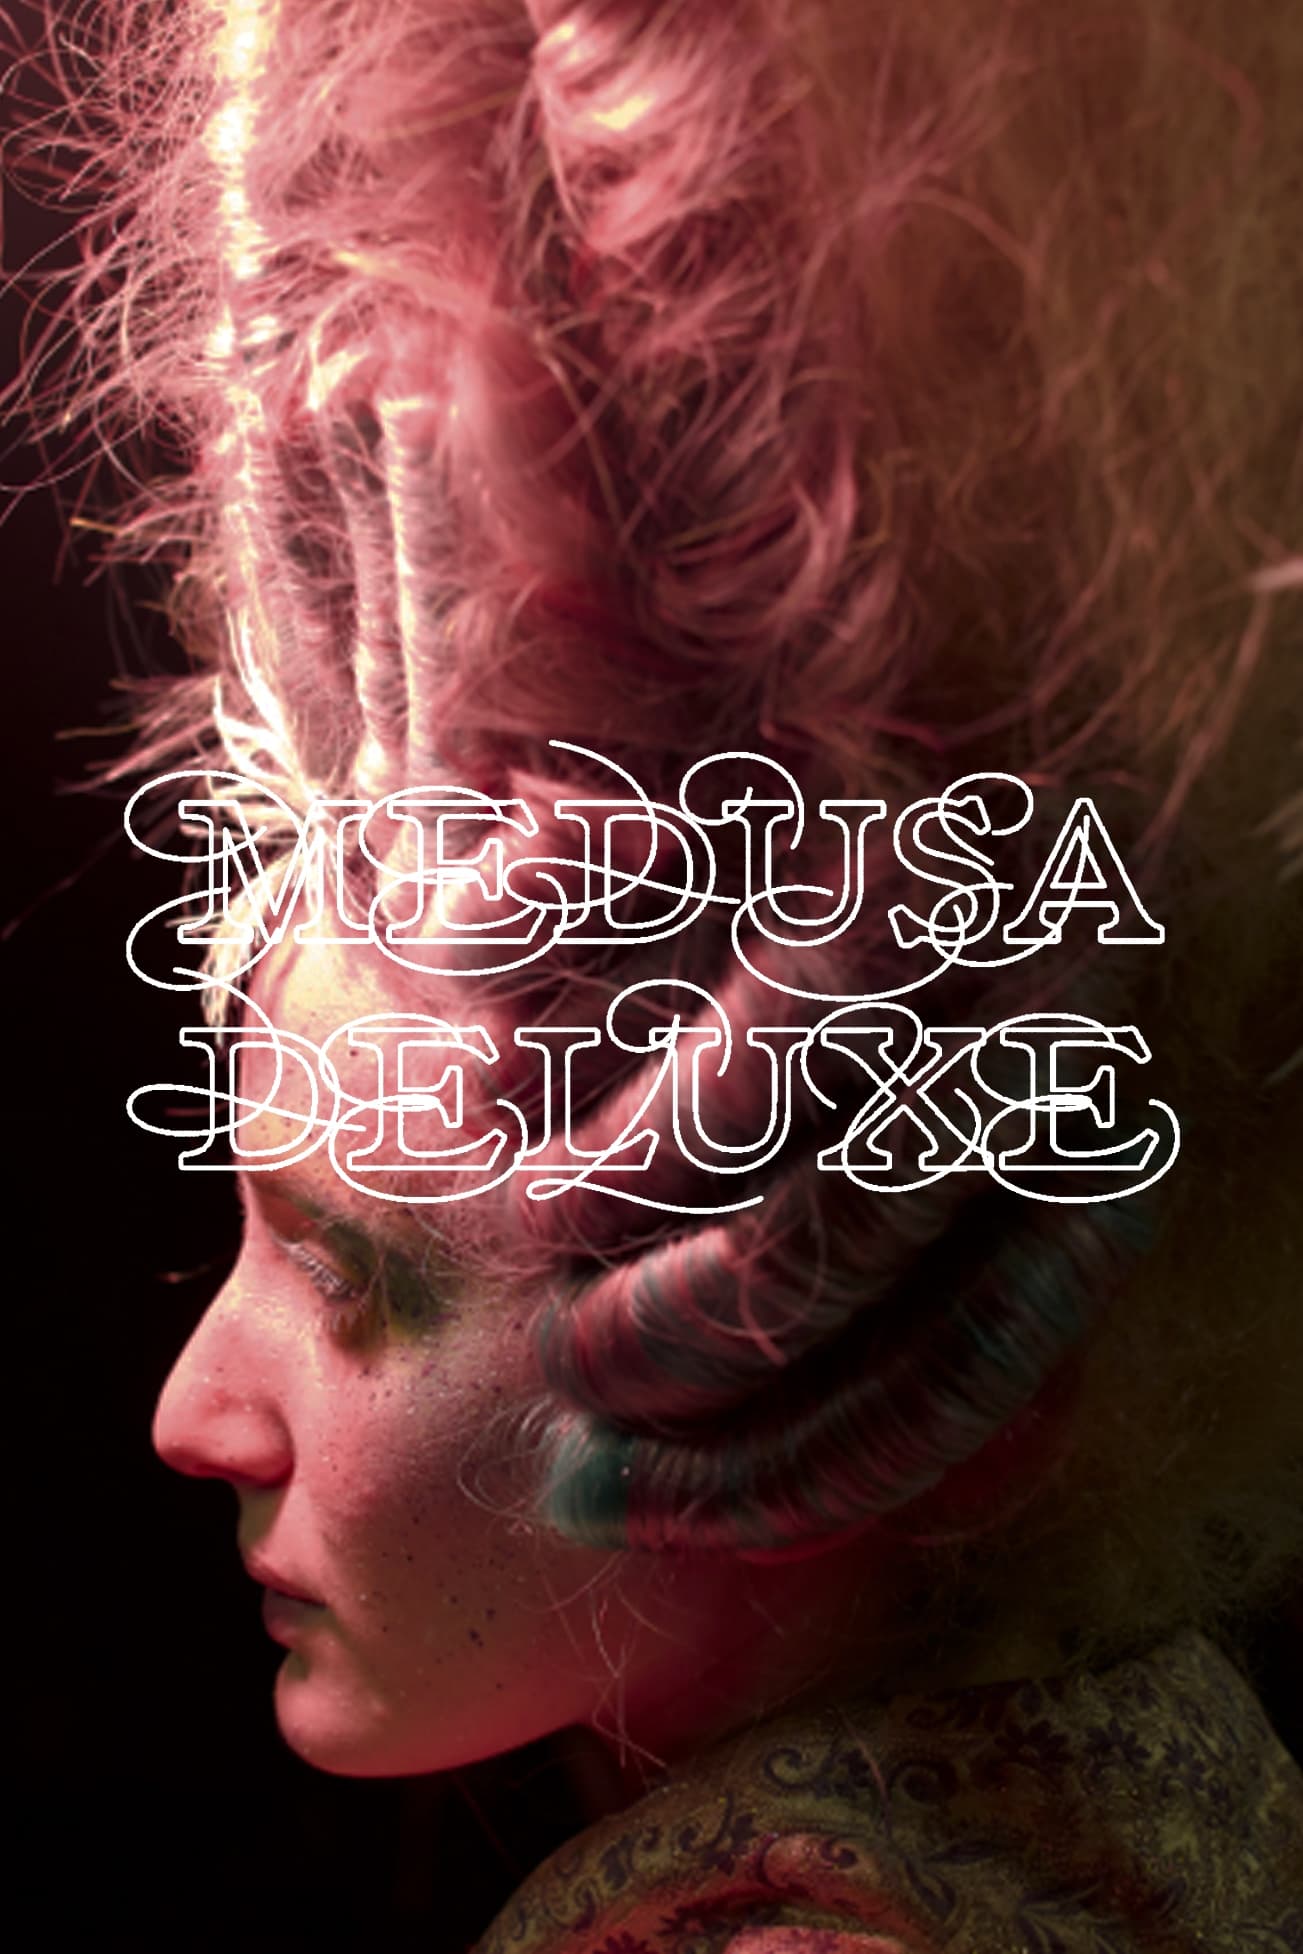 Medusa Deluxe Cinema Release